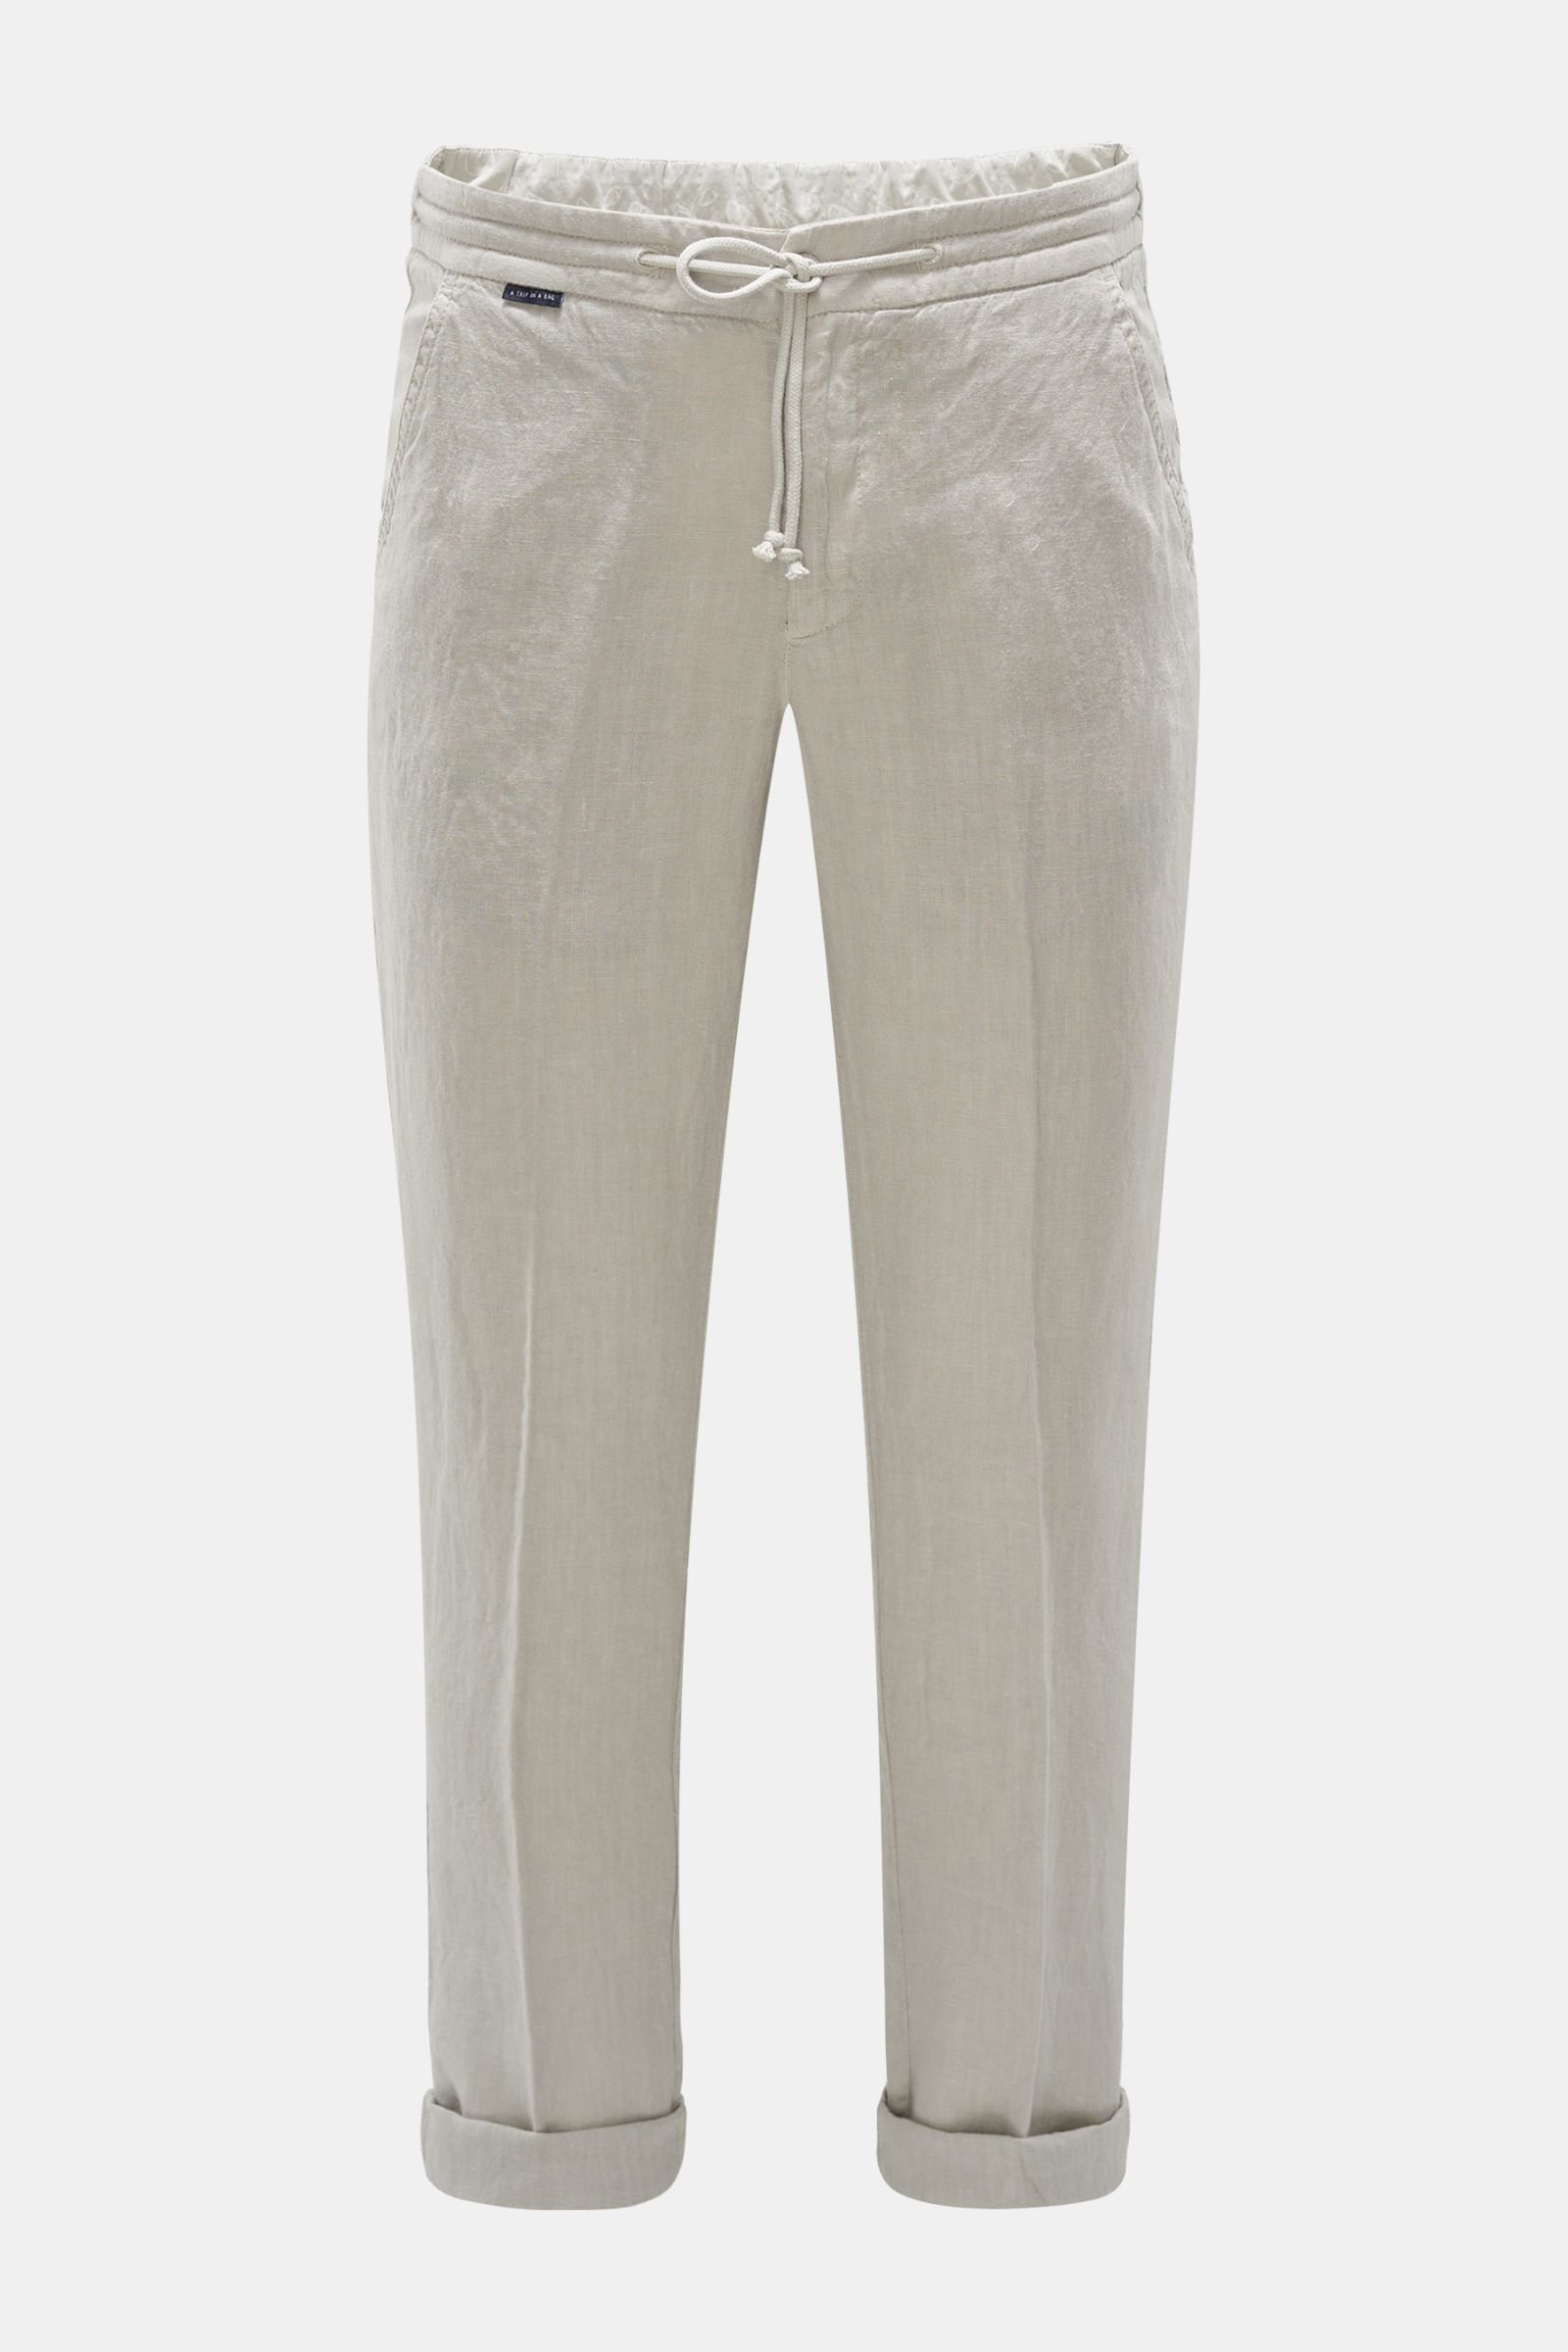 Linen jogger pants 'Linen Pant' light grey